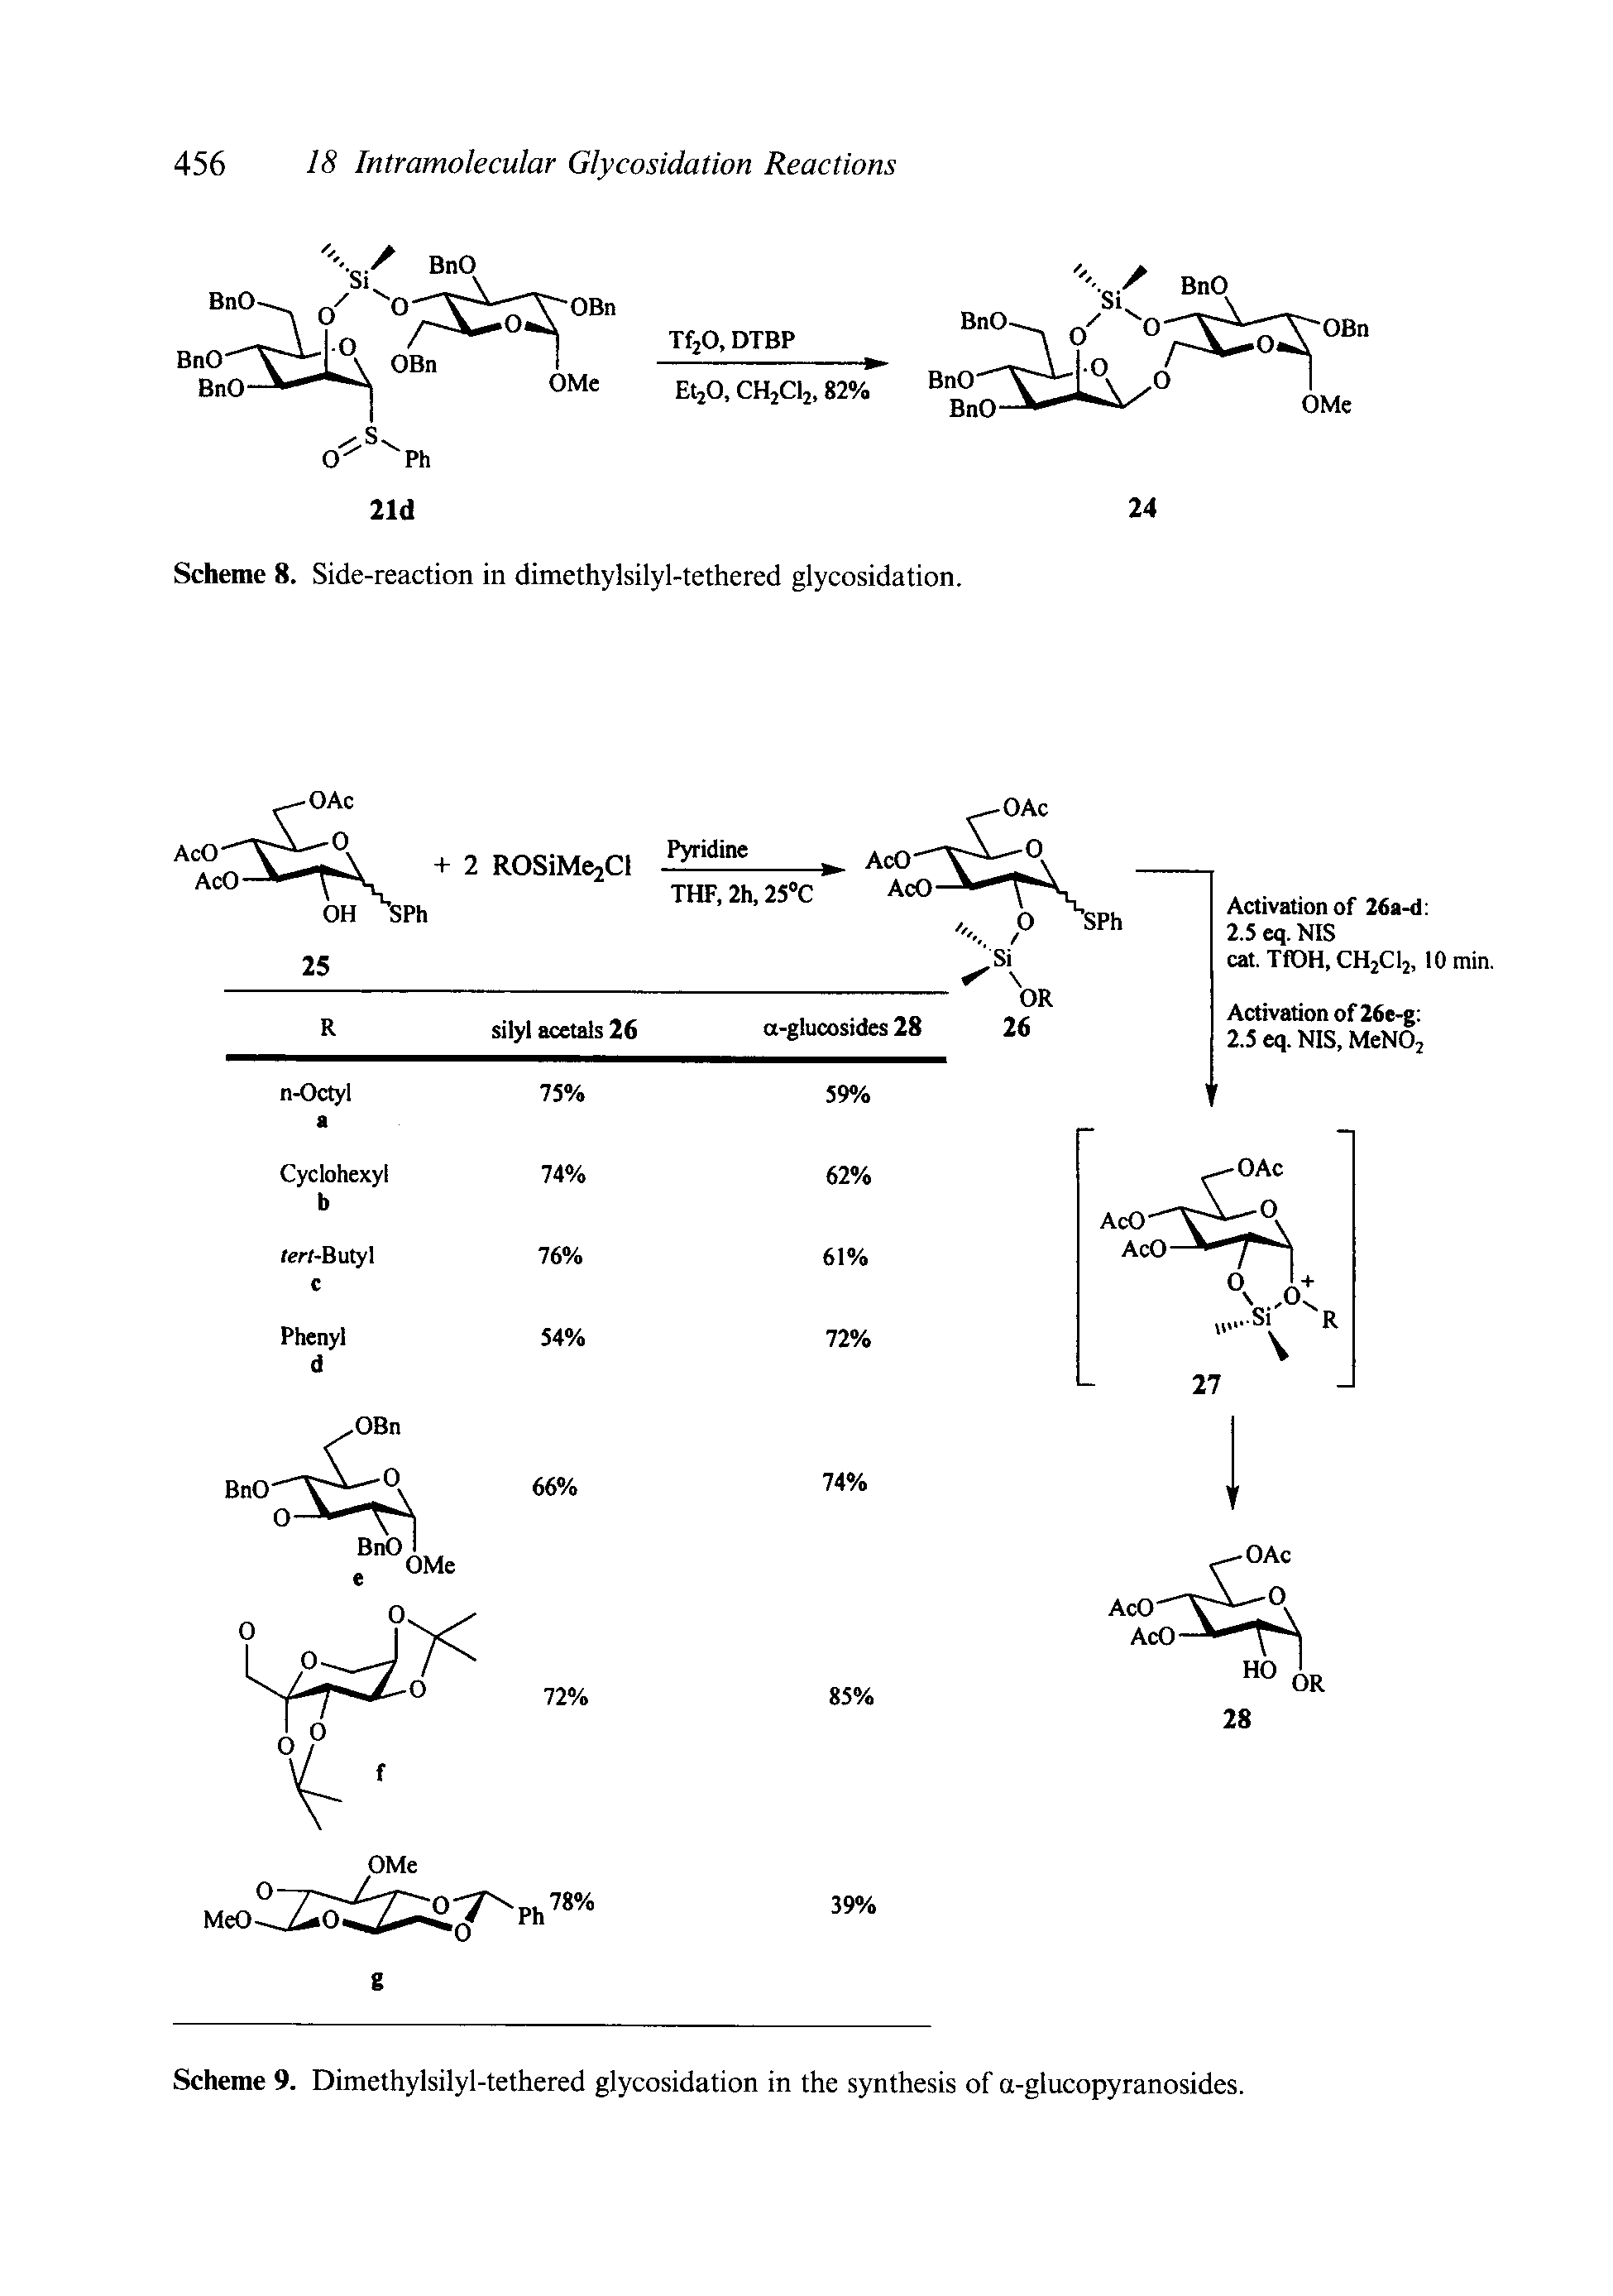 Scheme 9. Dimethylsilyl-tethered glycosidation in the synthesis of a-glucopyranosides.